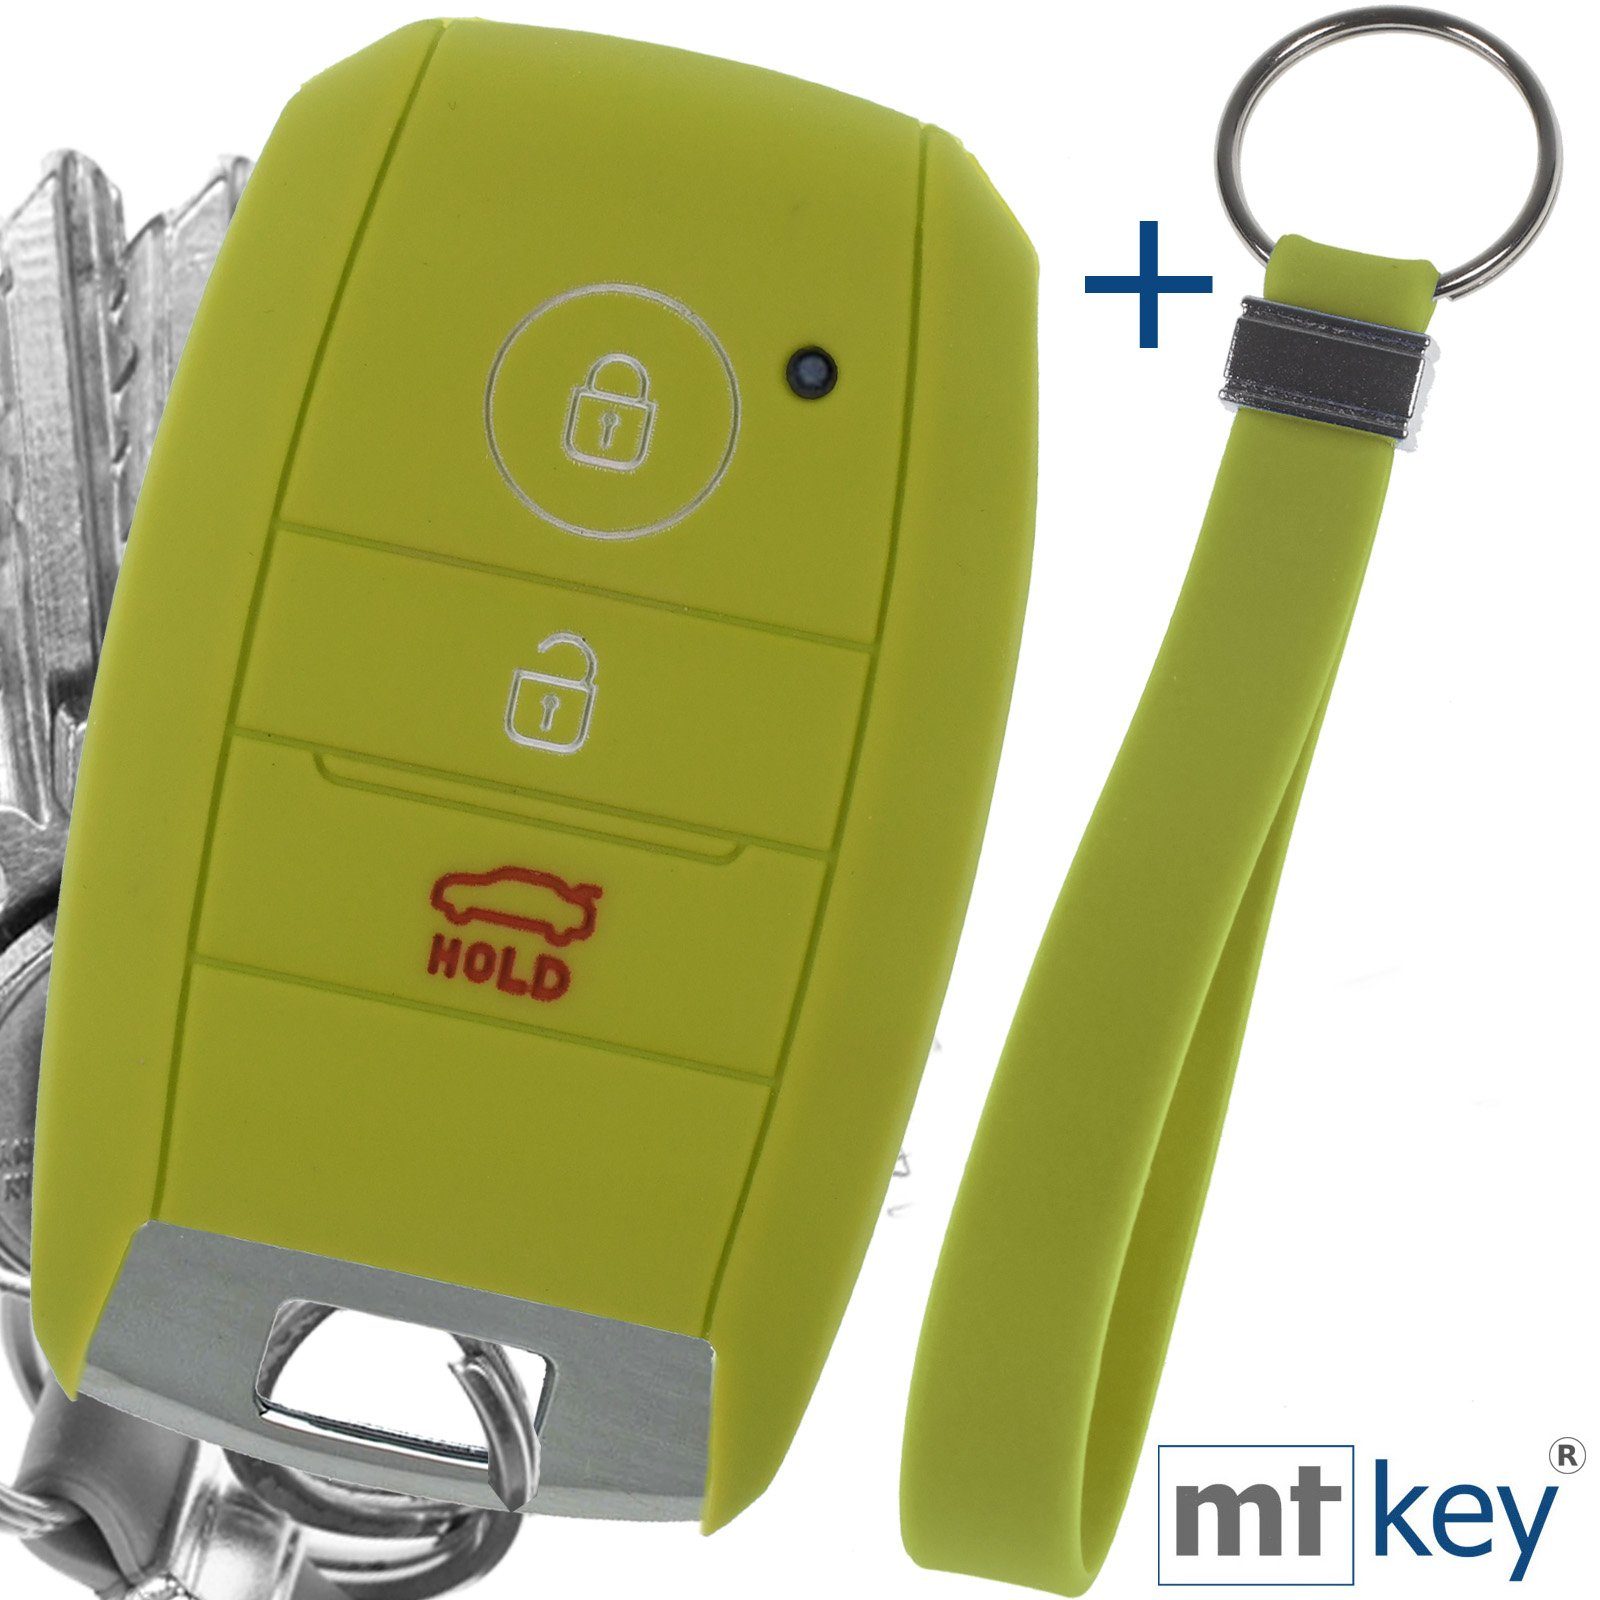 mit Schutzhülle mt-key Autoschlüssel Ceed Soul Picantio Sportage KIA 3 Schlüsseltasche Apfelgrün Silikon KEYLESS für Schlüsselband, Stonic Softcase Rio Tasten